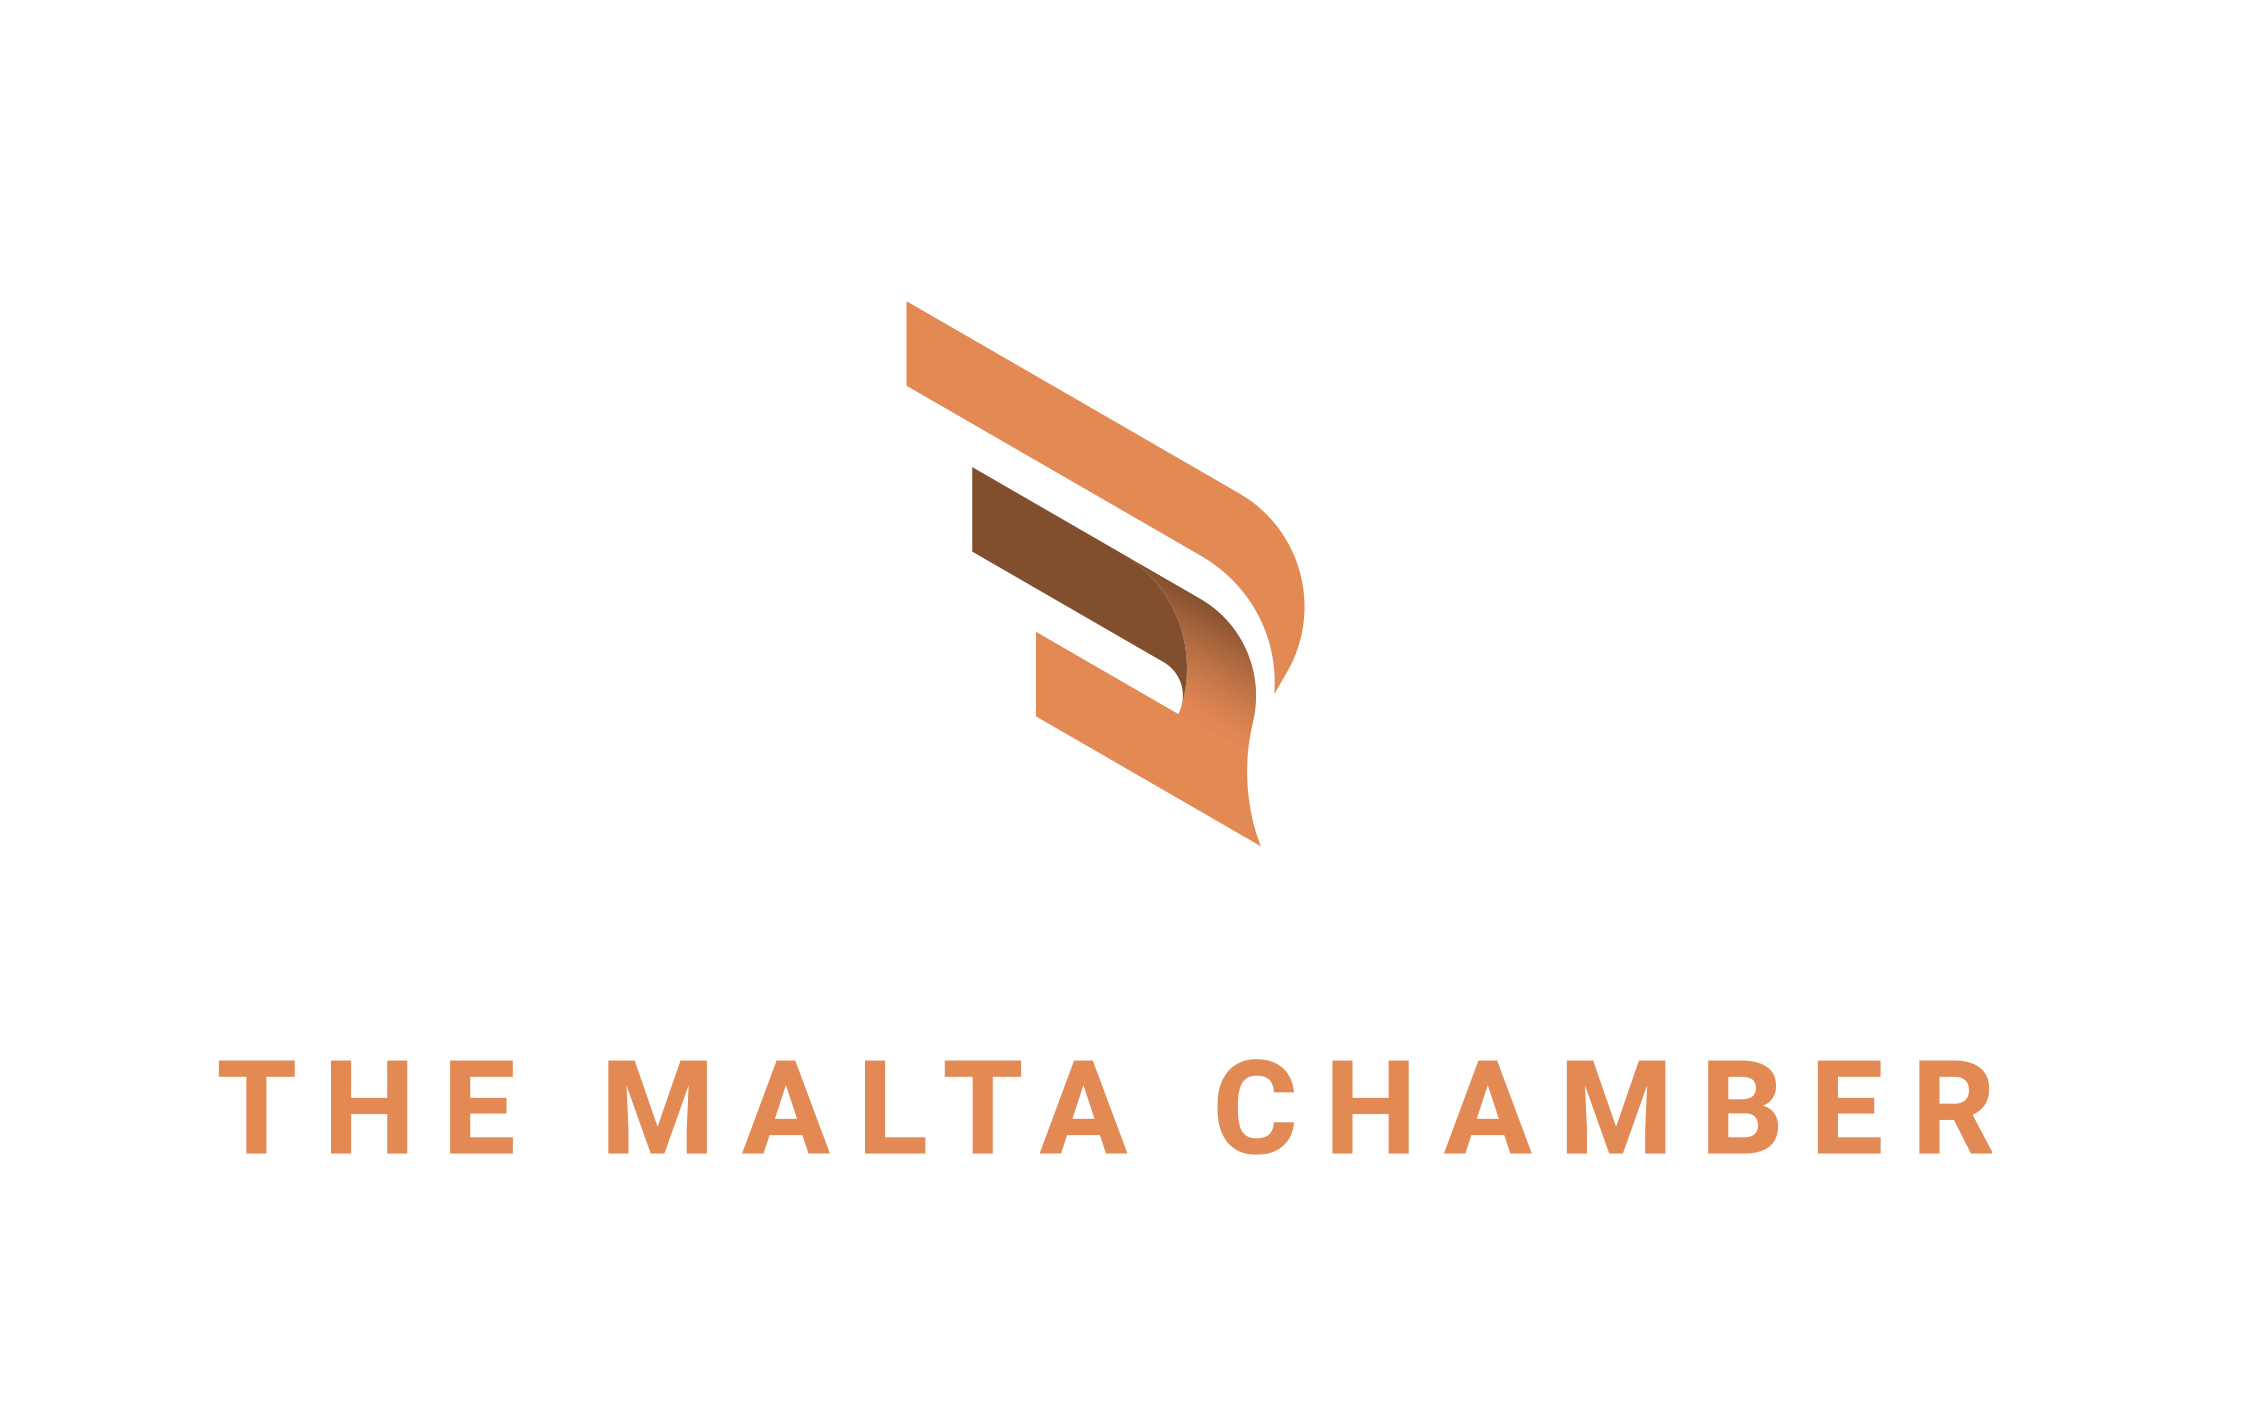 Members of The Malta Chamber